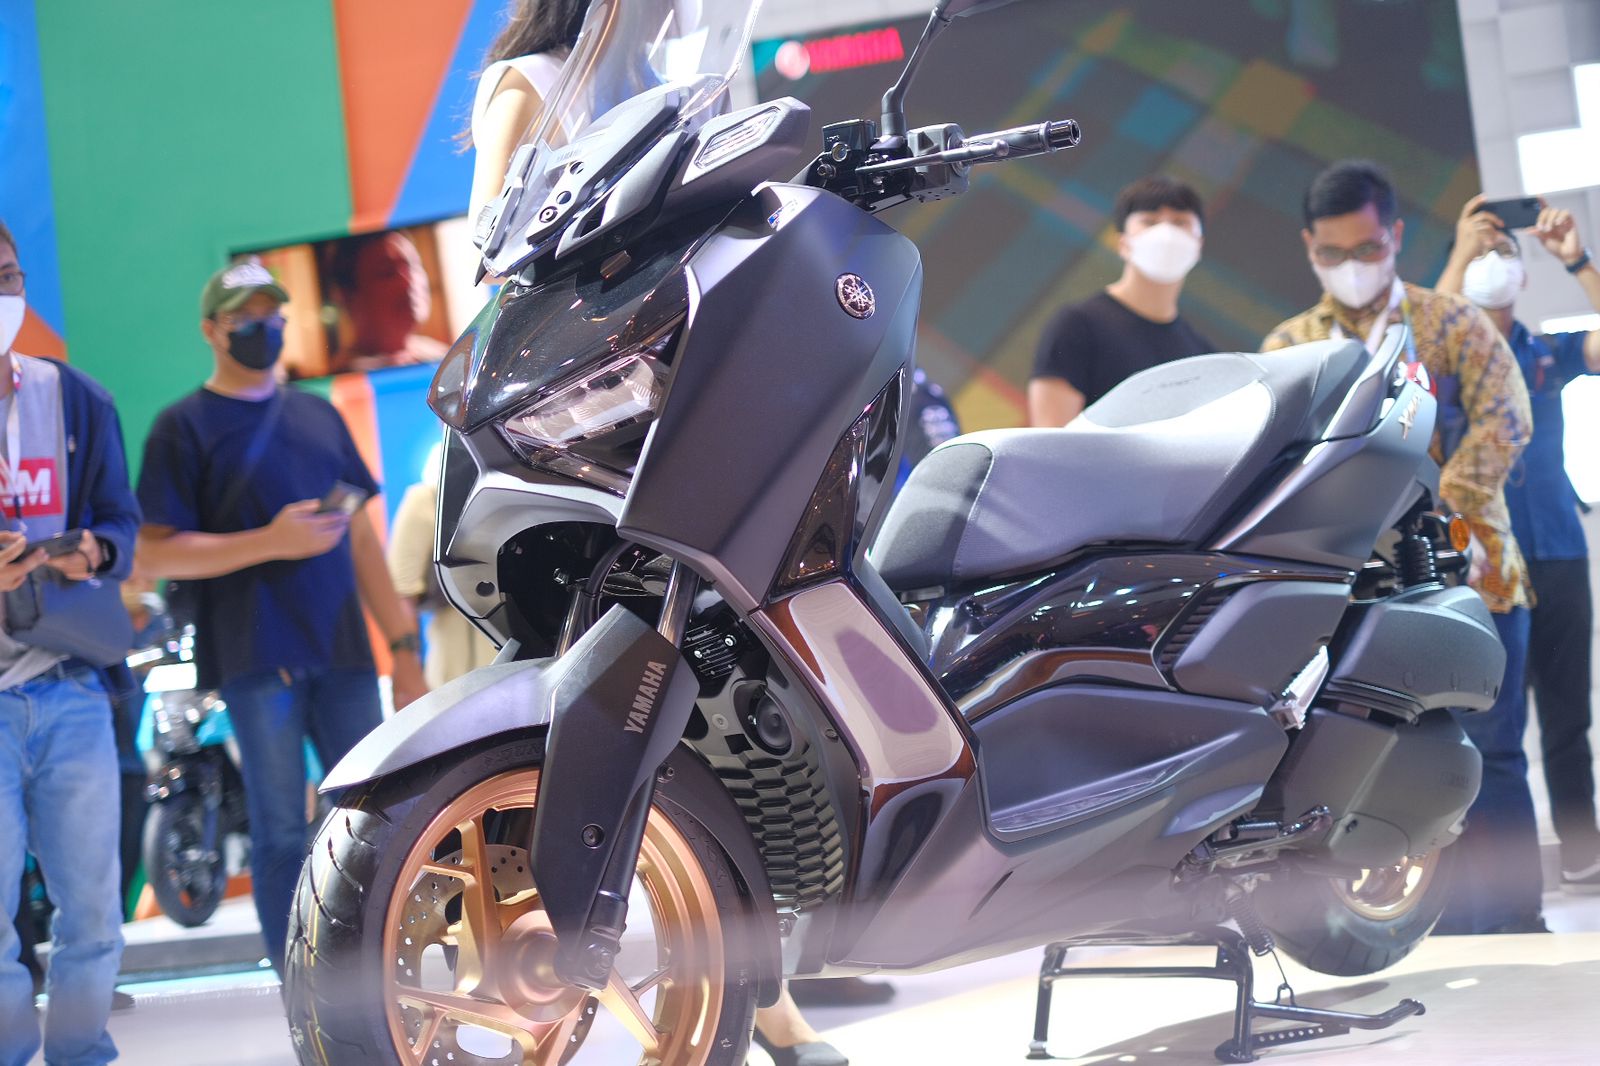 Yamaha New Xmax Connected Kini Tersedia Di Bali, Berapa Harganya?